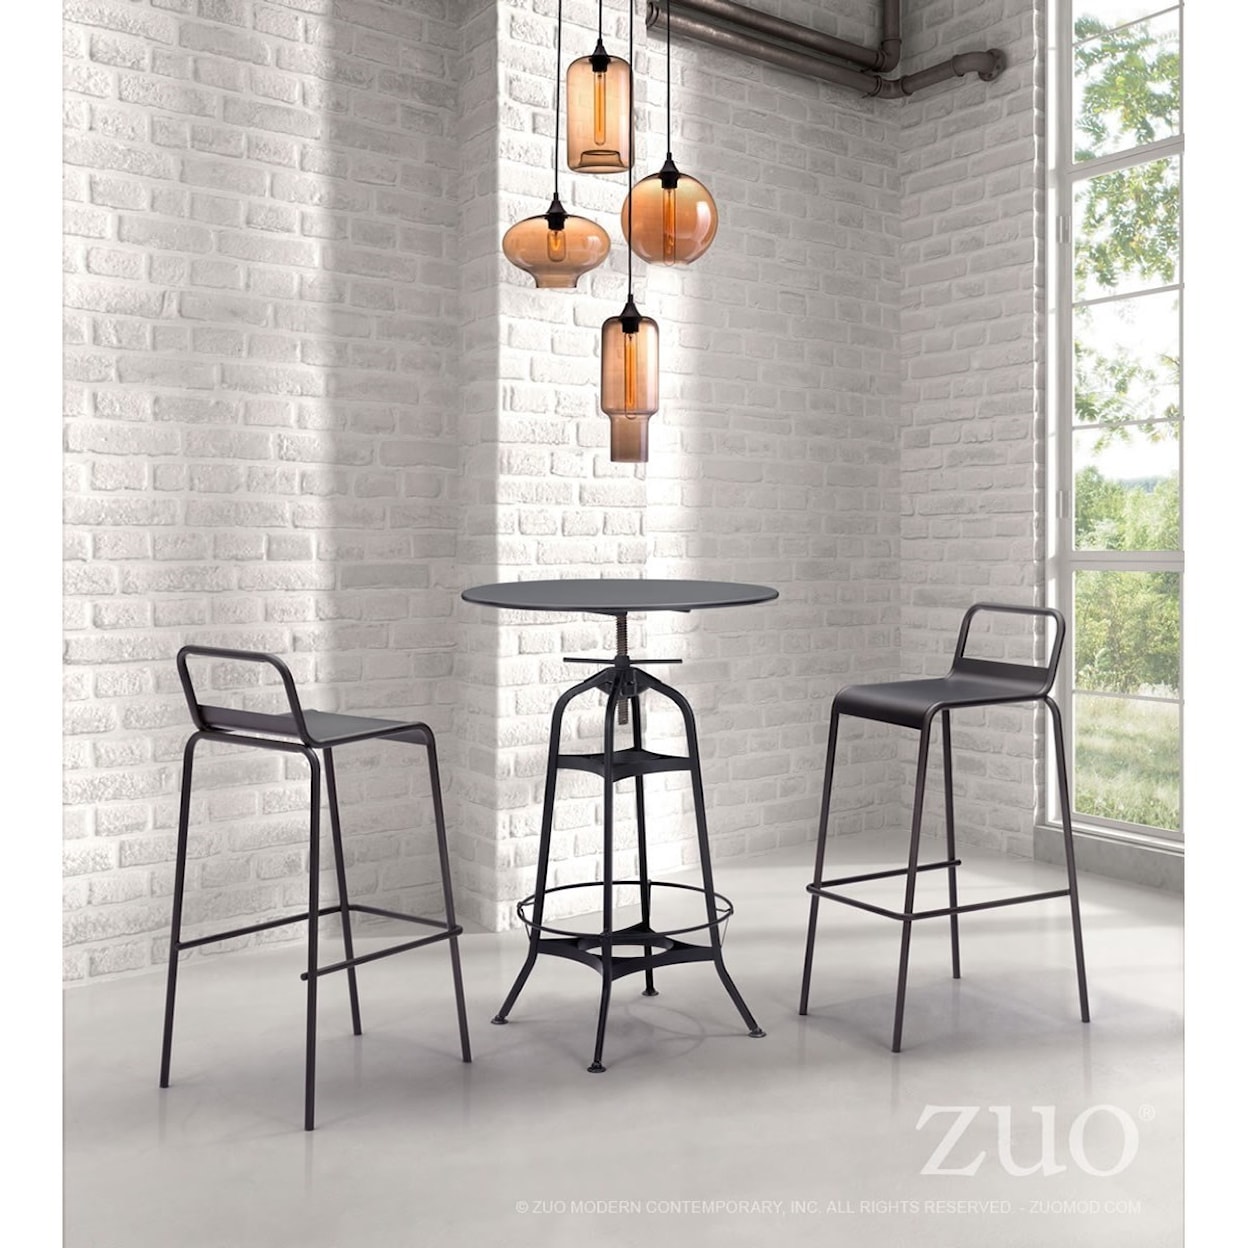 Zuo Era Lighting Ceiling Lamp